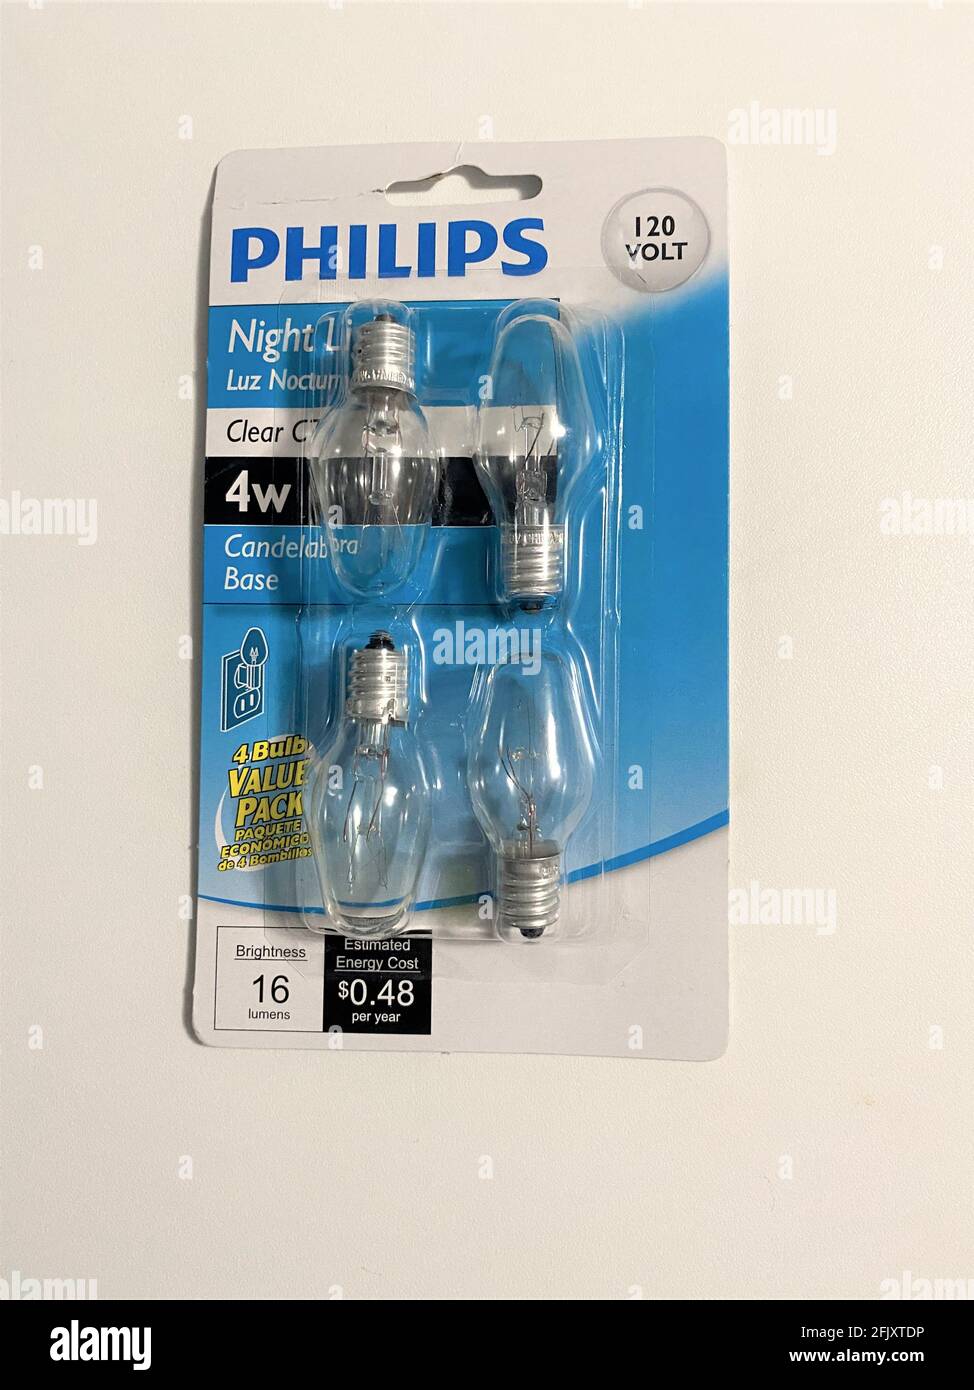 A pack of Philips brand night light bulbs, clear, 120 volts. Energy saving bulbs. Stock Photo